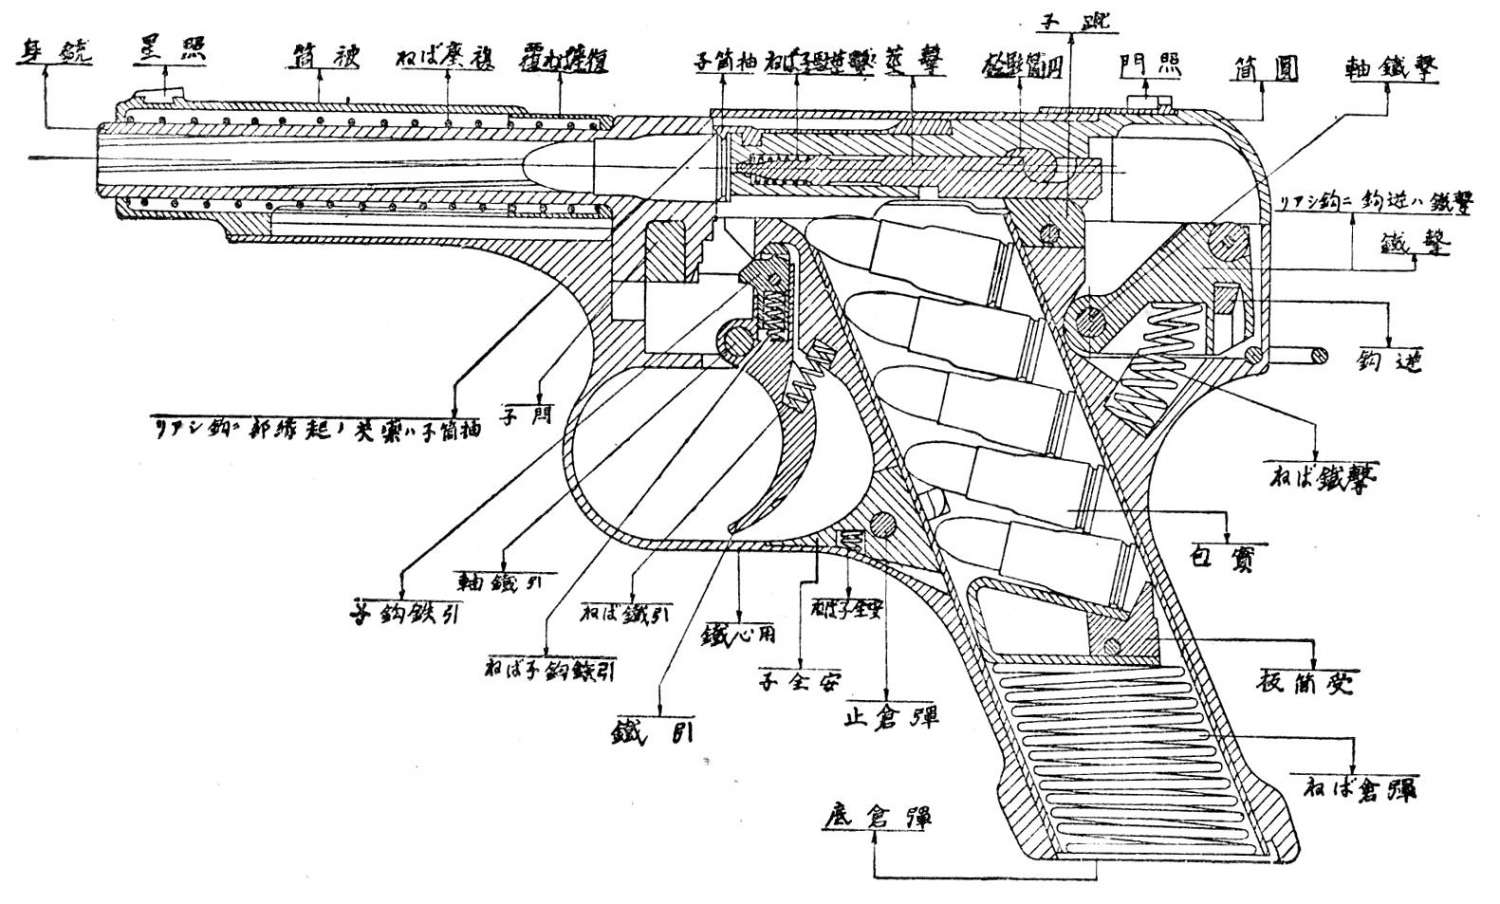 Japanese Nambu Type 94 Pistol